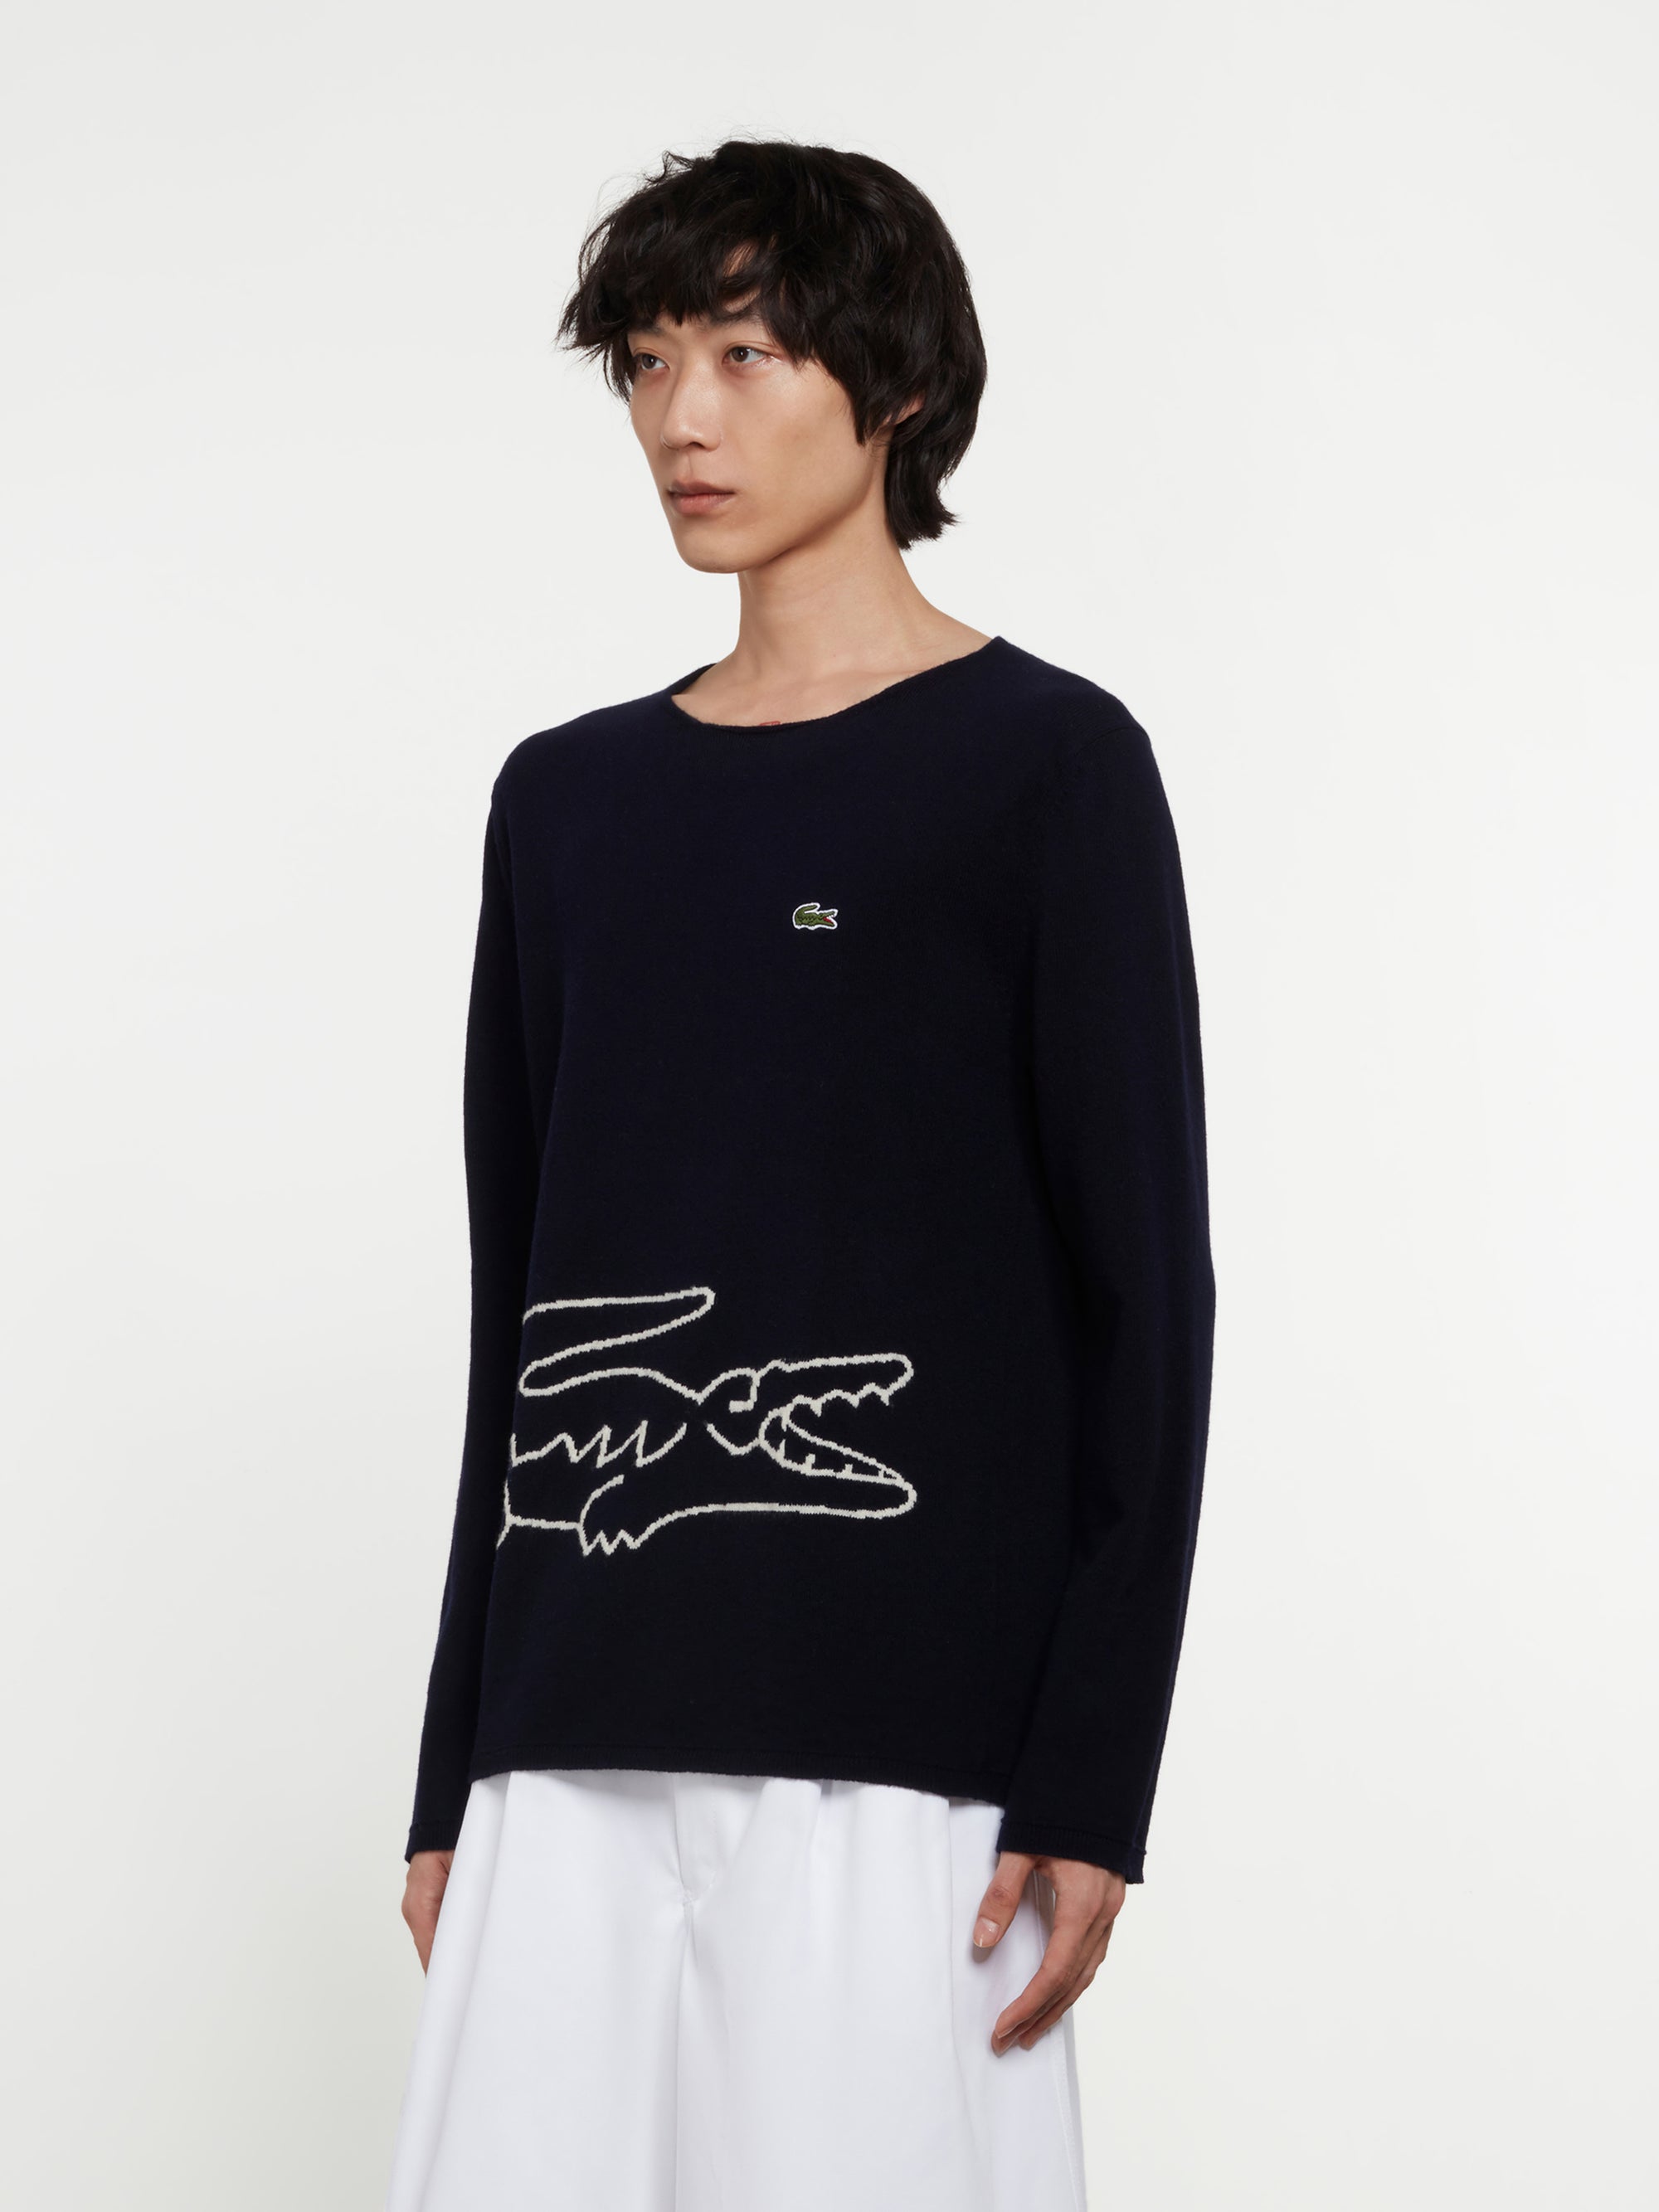 CDG Shirt - Lacoste Men's Knit Sweater - (Black) view 2